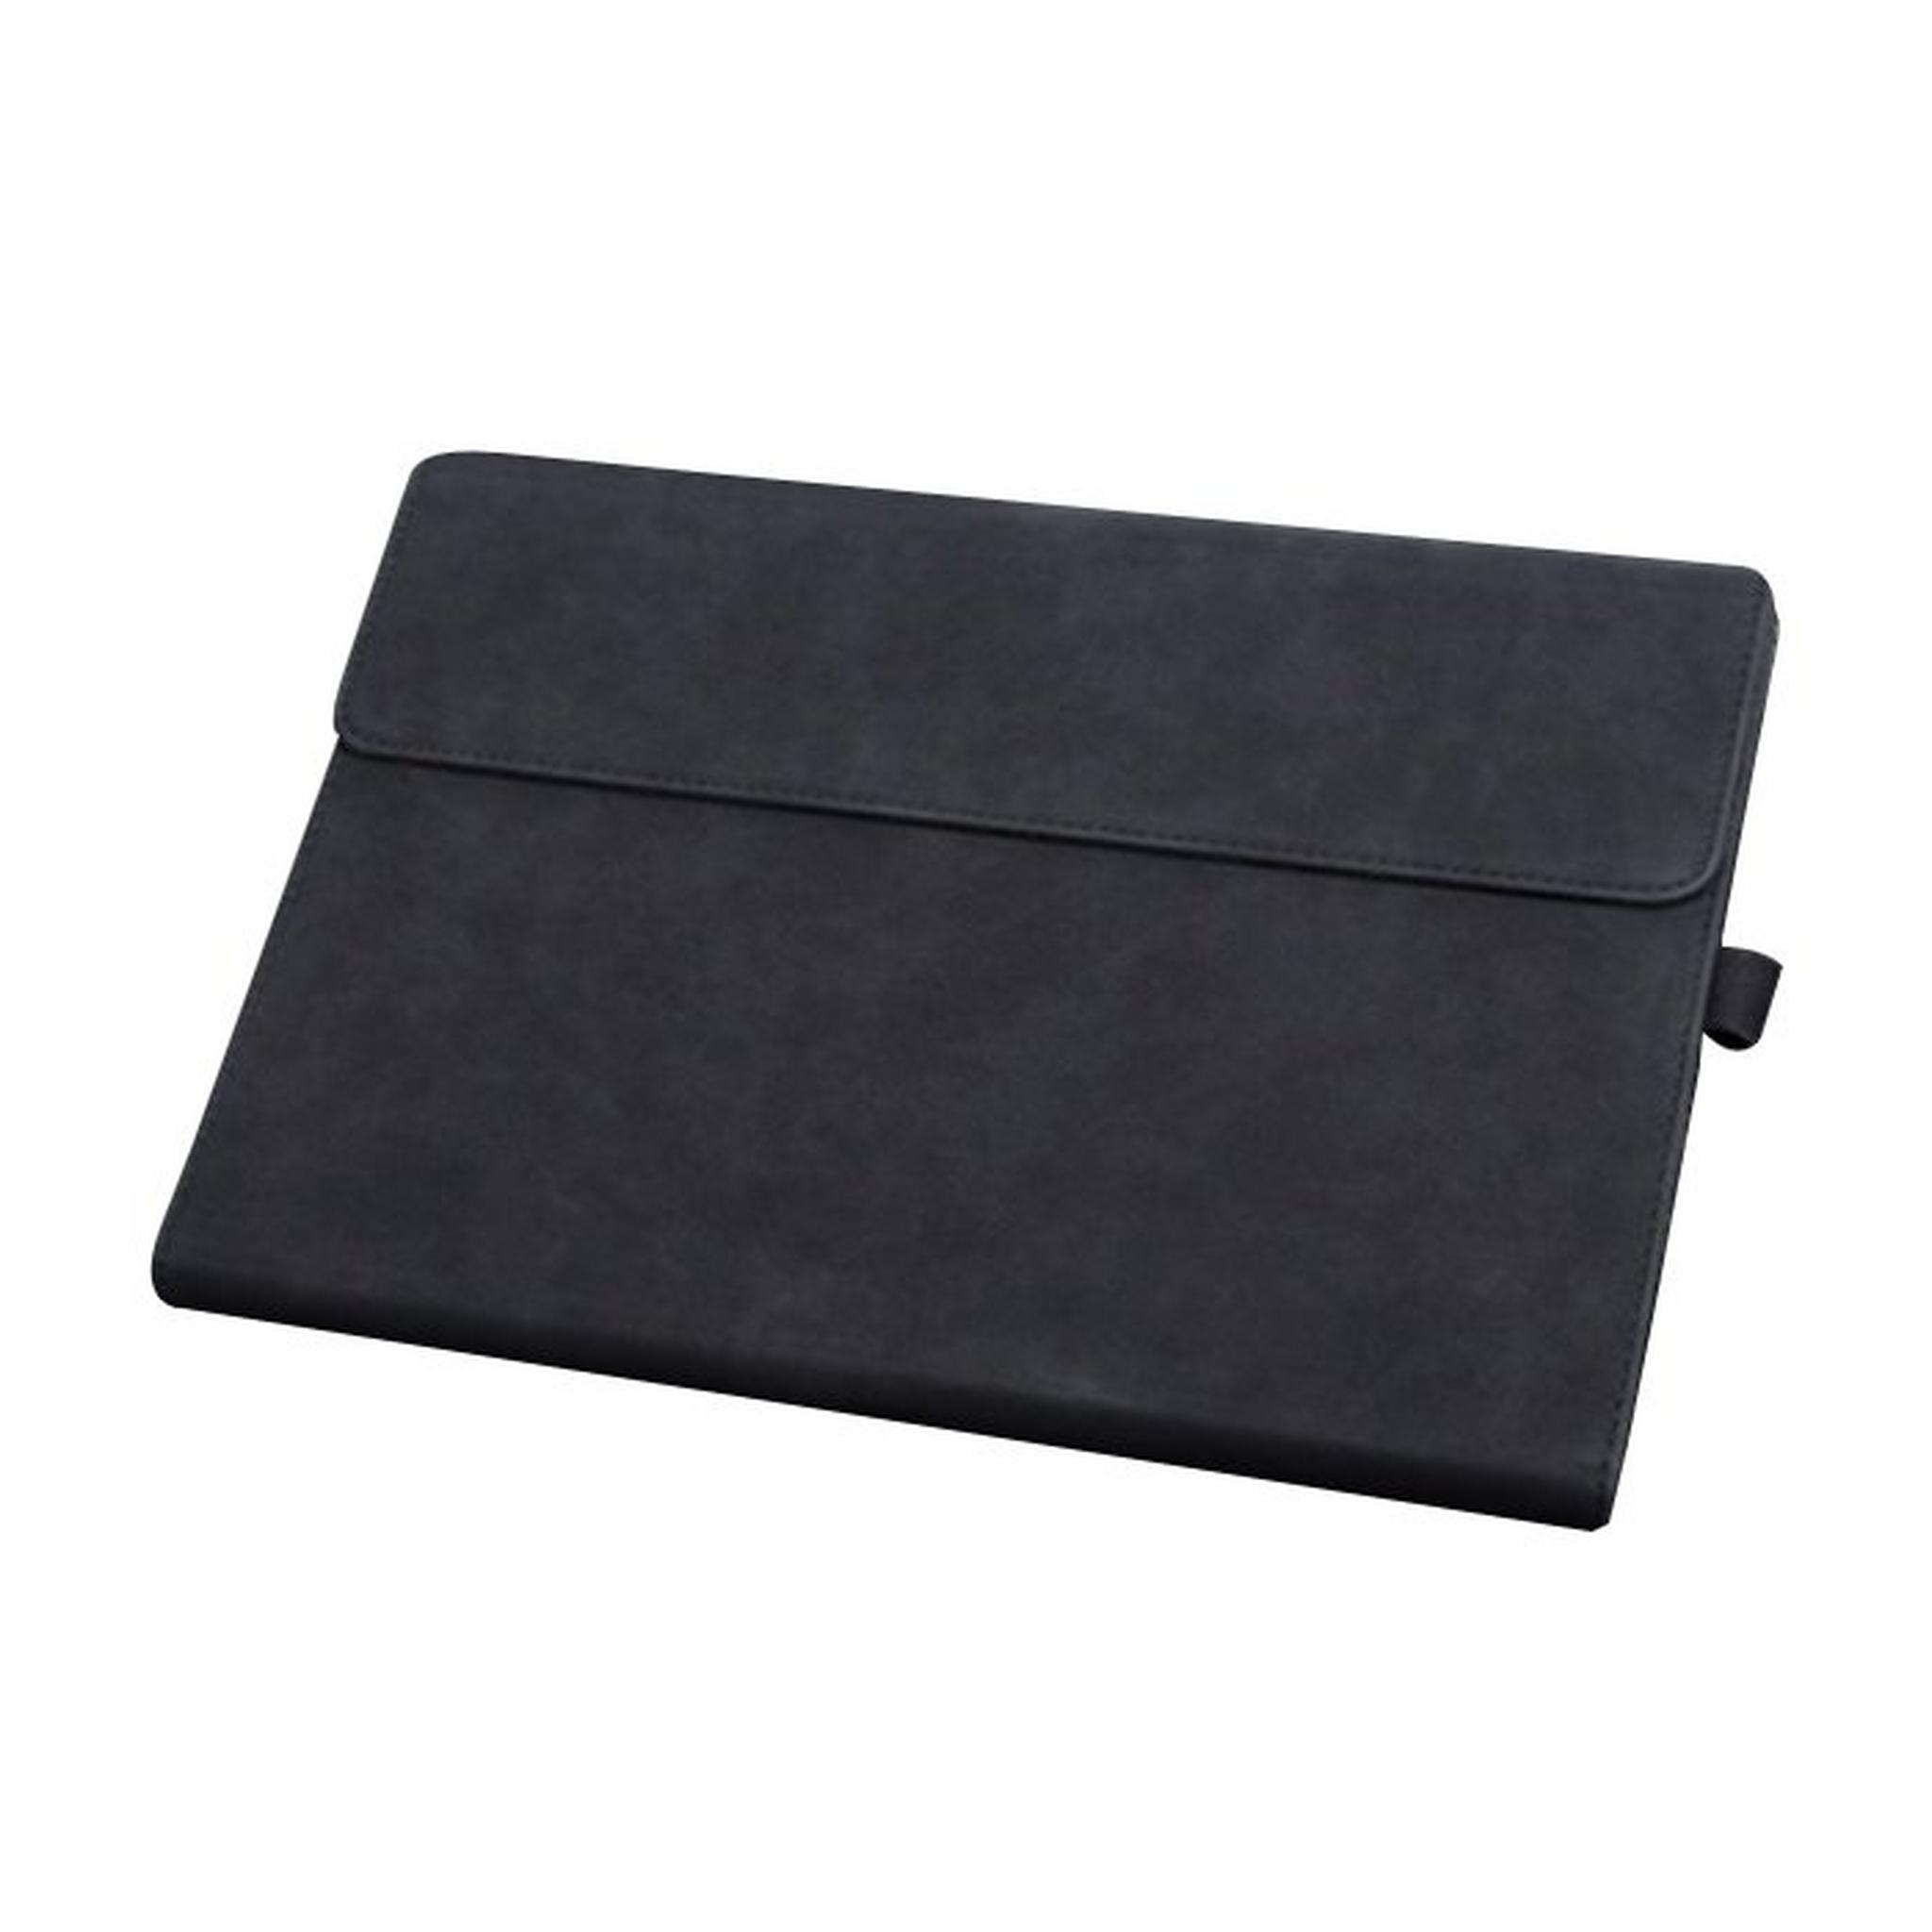 EQ Suitcase 7-inch Tablet Case - Black